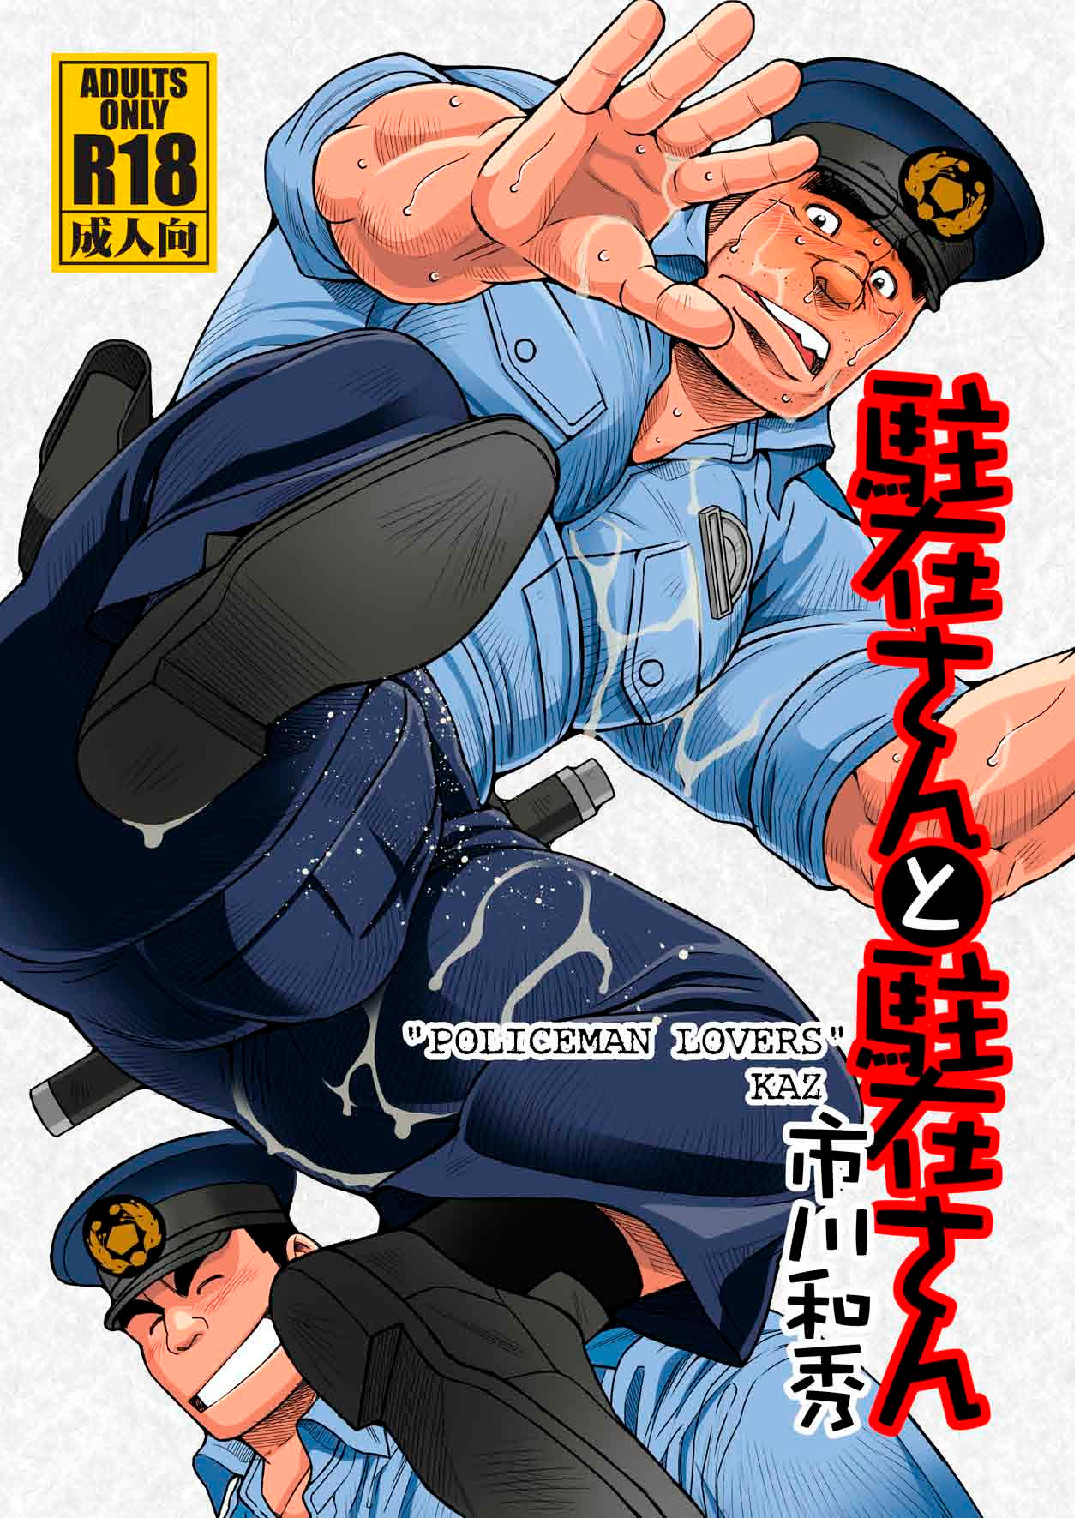 Chuuzai-san to Chuuzai-san - Policeman Lovers